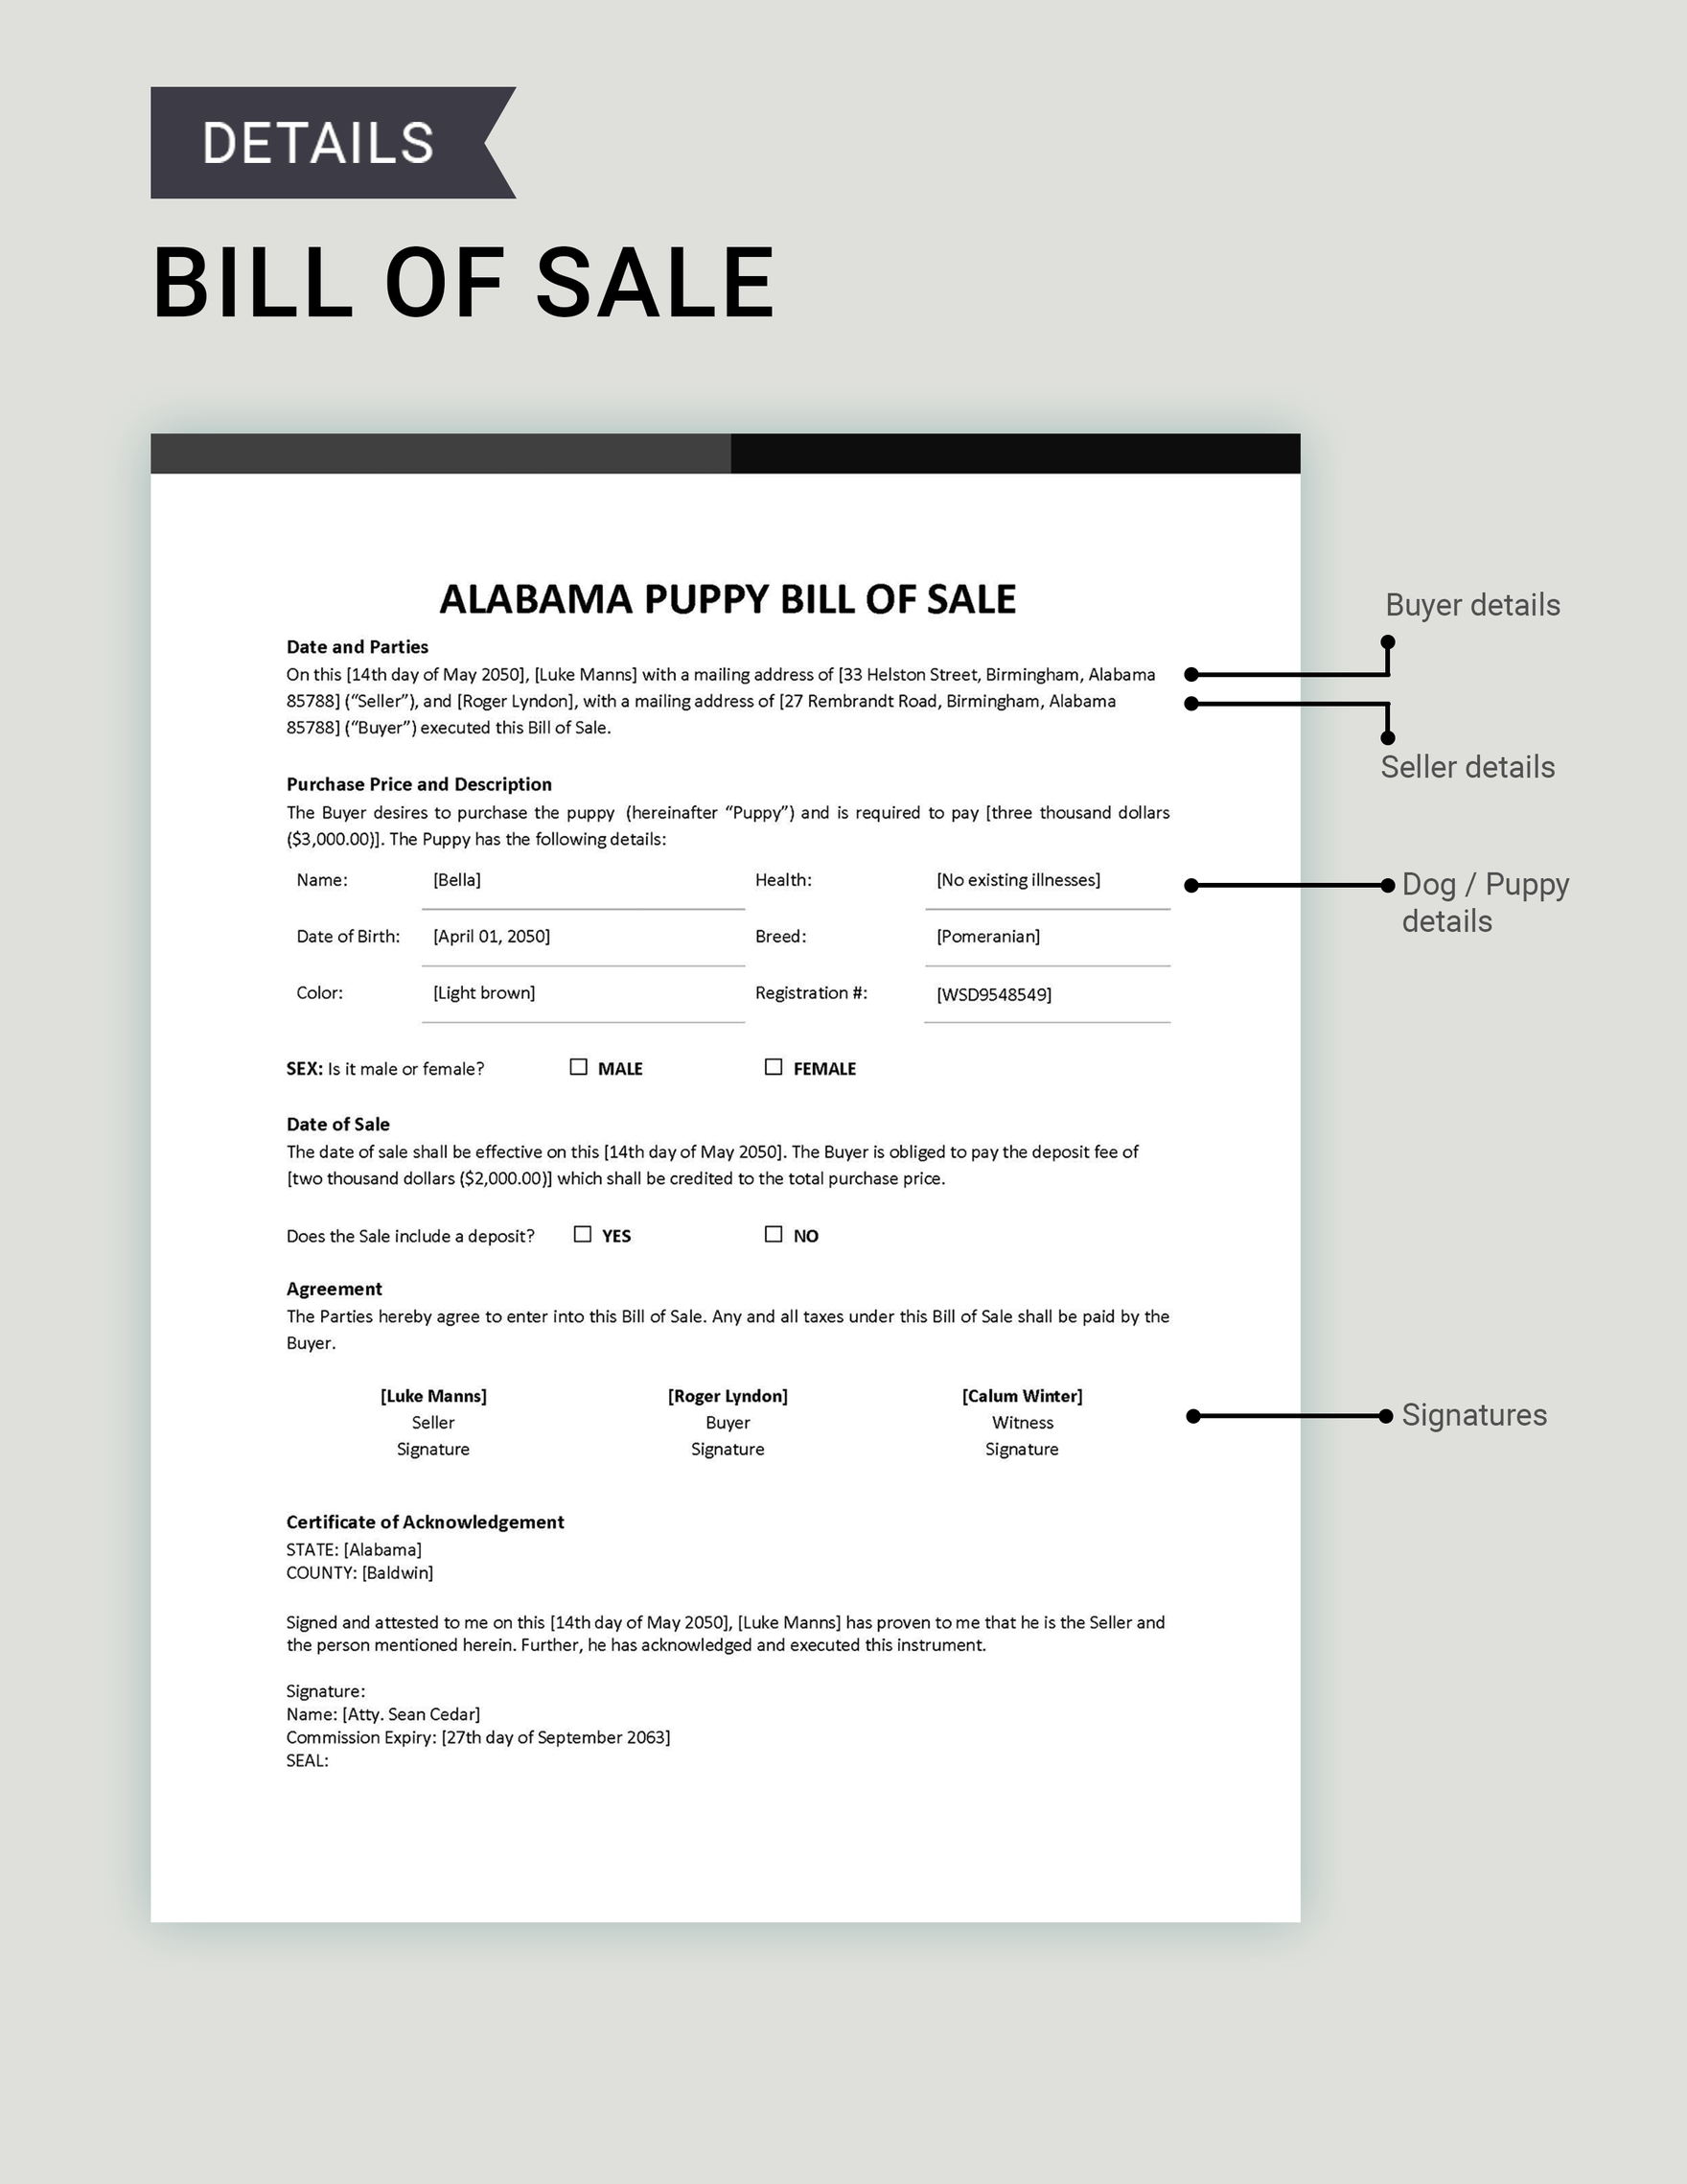 Alabama Dog / Puppy Bill of Sale Template